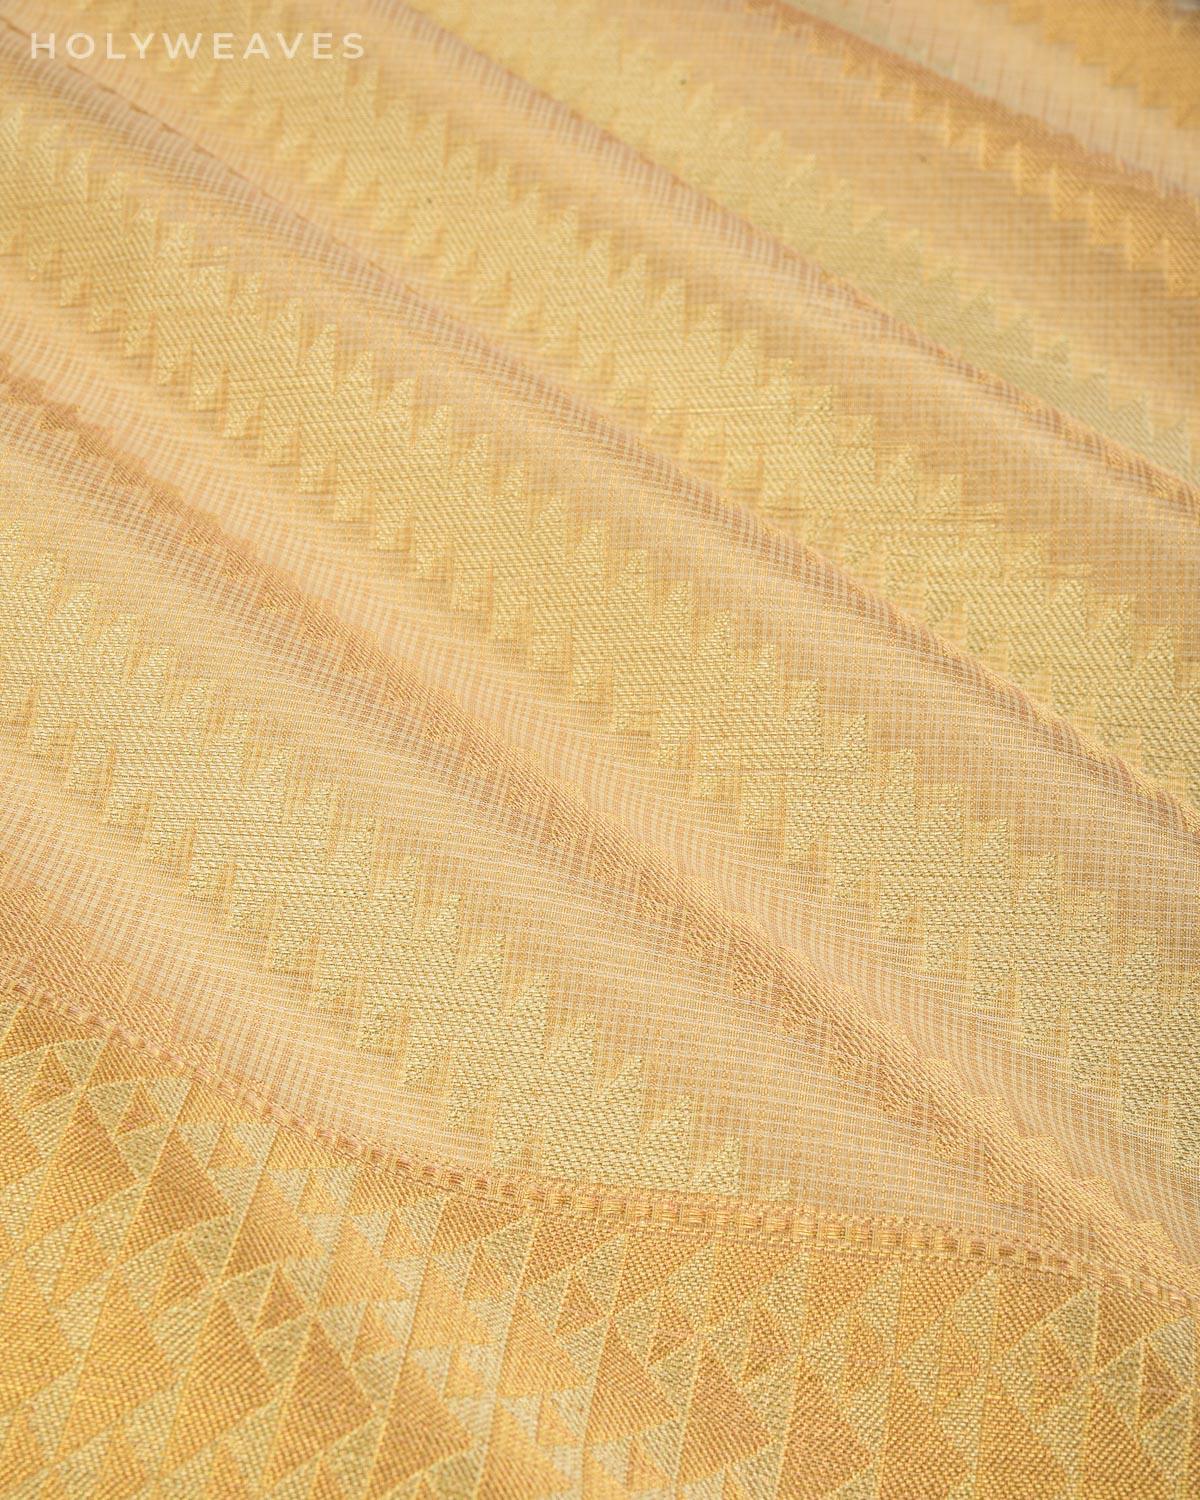 Metallic Golden Beige Banarasi Serrated Leheriya Sona Rupa Cutwork Brocade Woven Kota Tissue Saree - By HolyWeaves, Benares